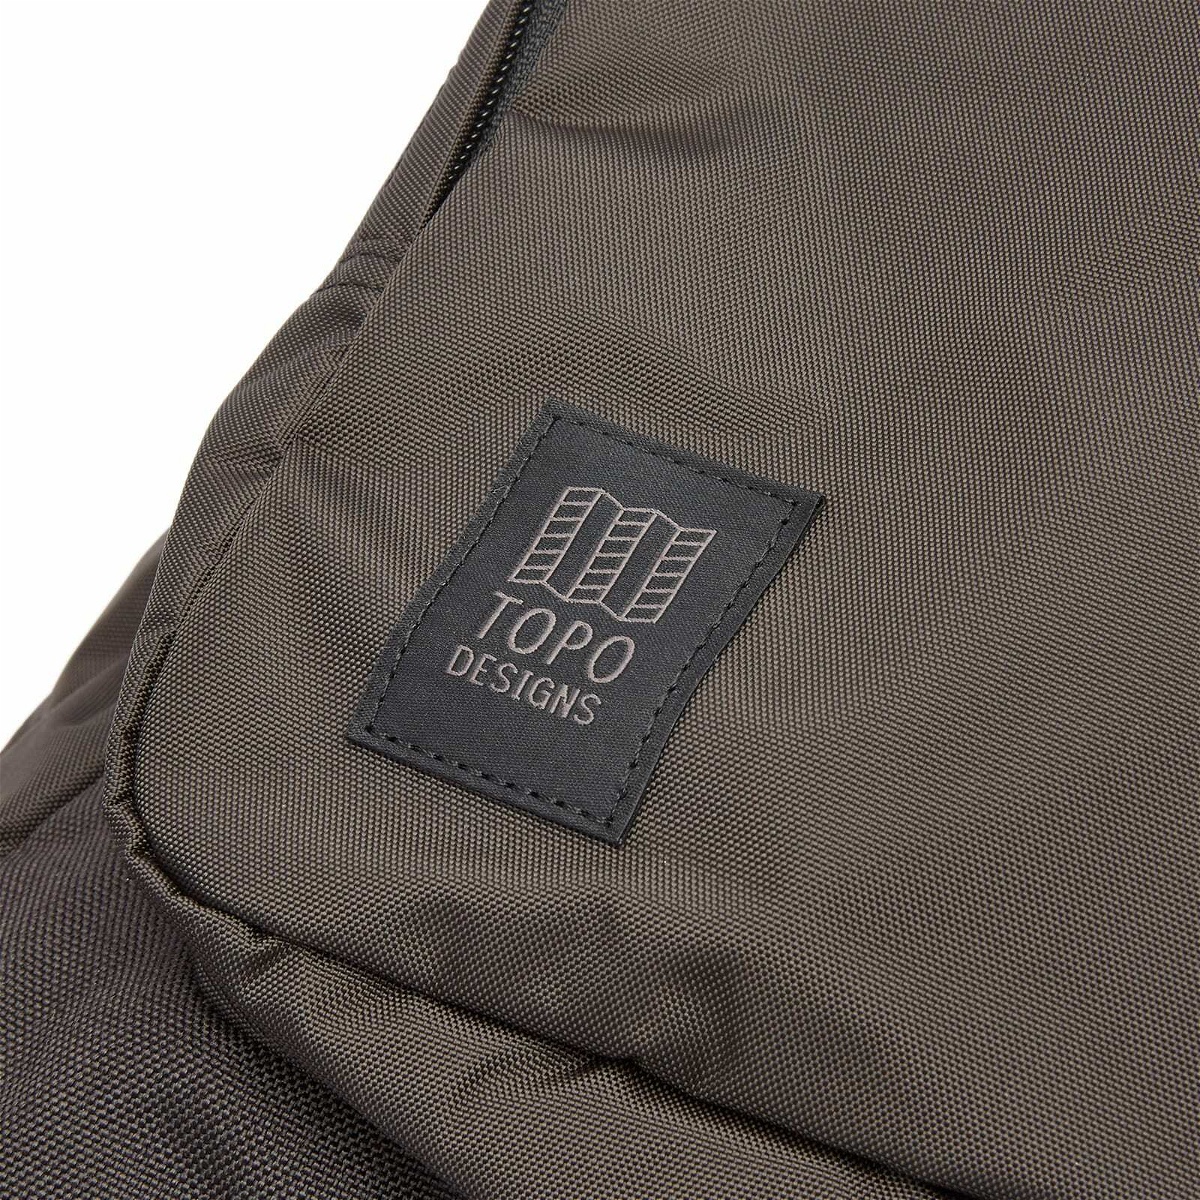 Topo Designs Peak Pack Backpack in Black Topo Designs